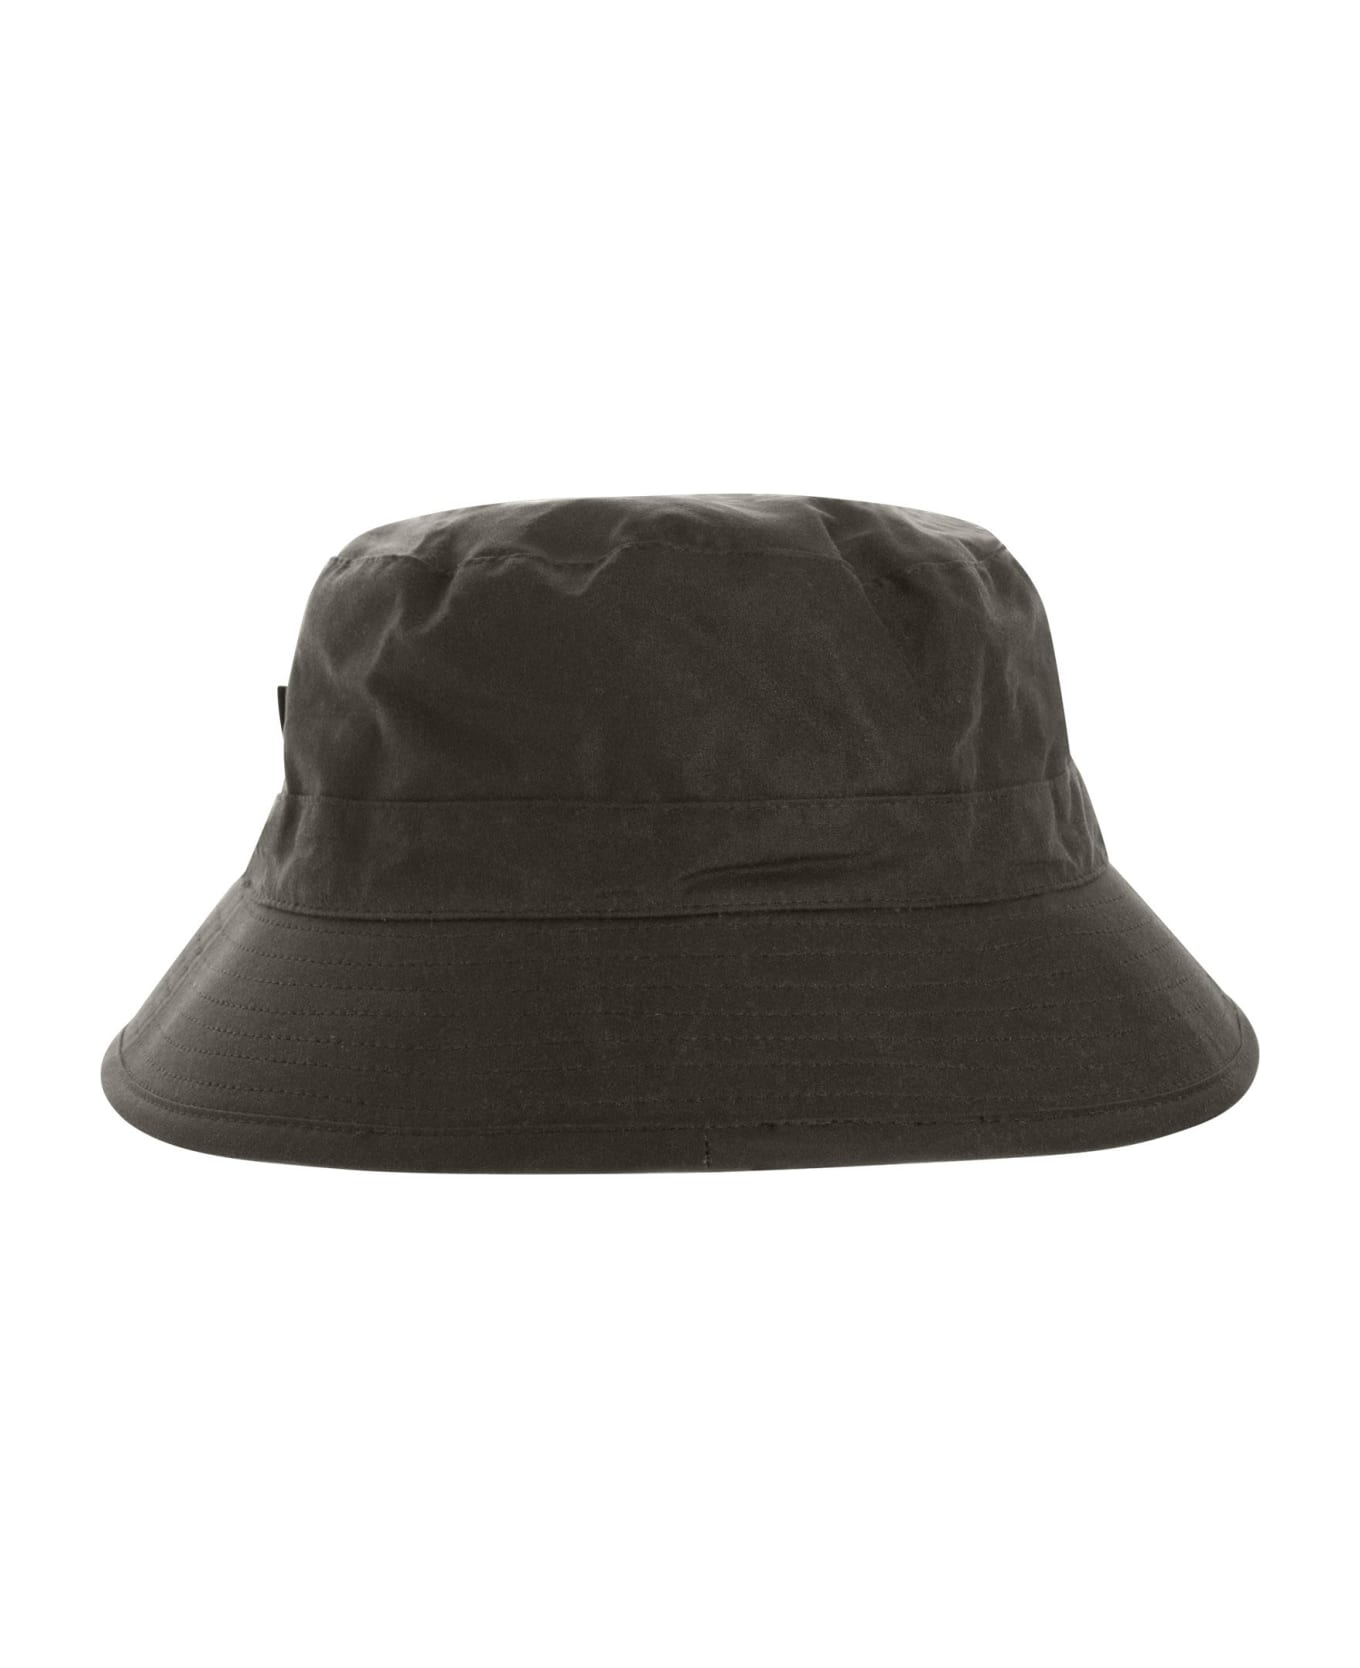 Barbour Sporthut Wax - Hat - Olive Green 帽子